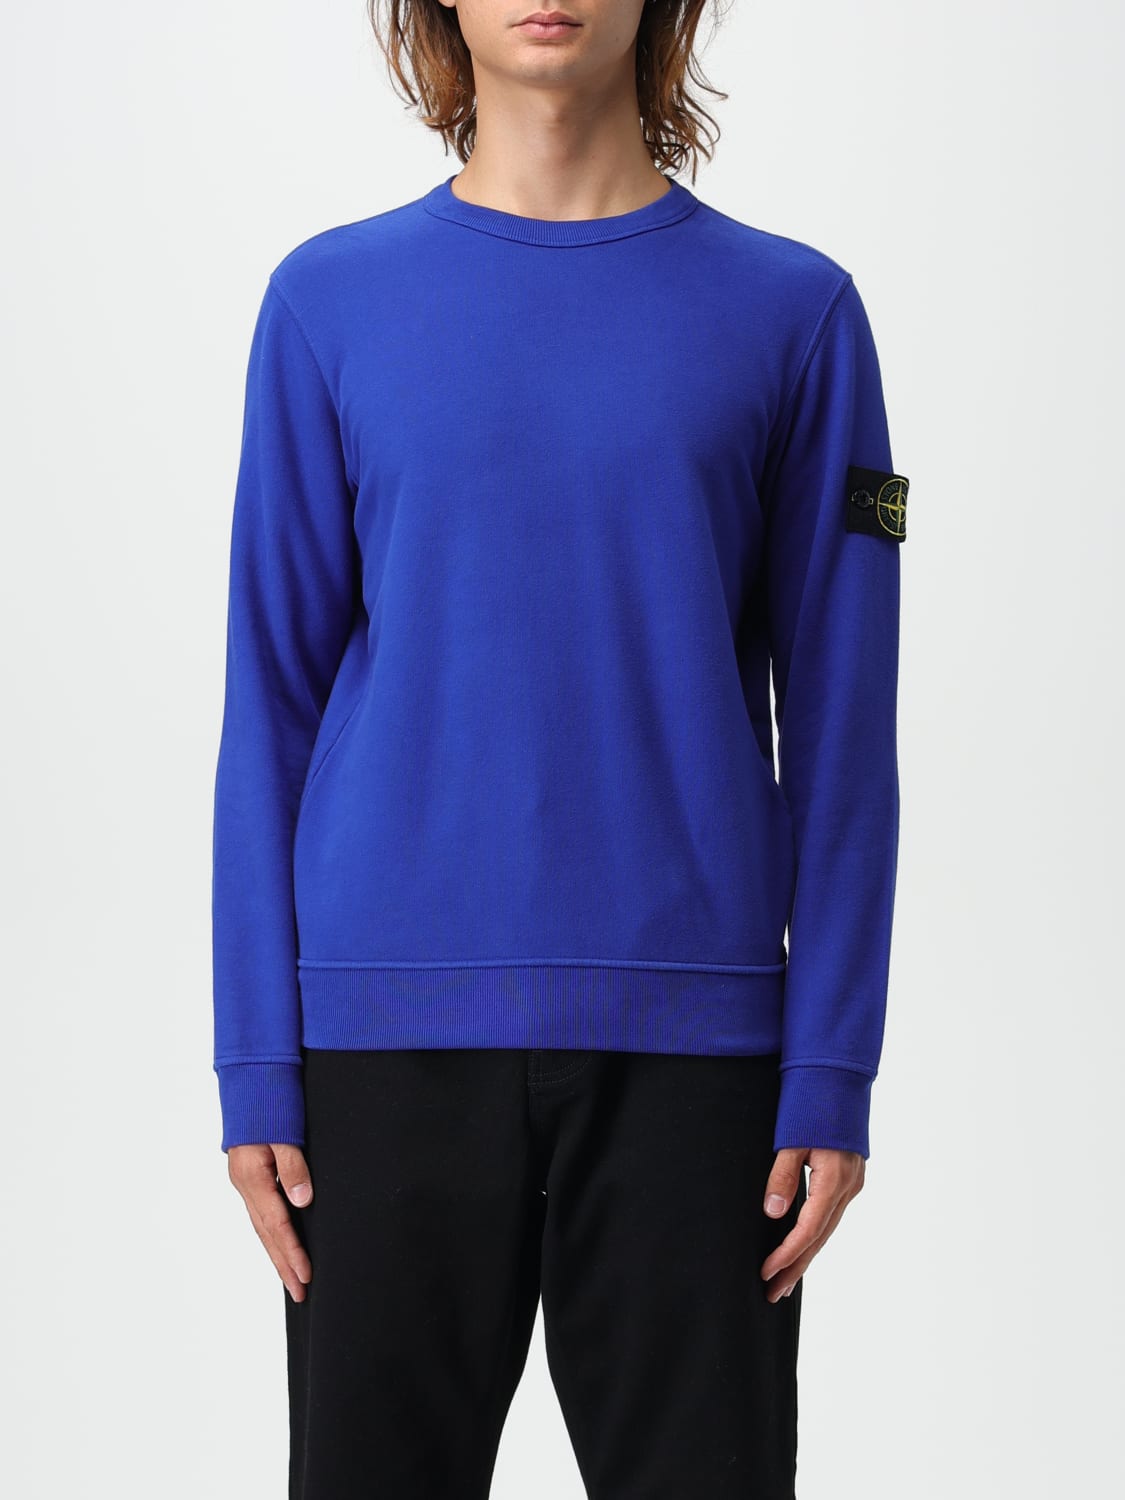 STONE ISLAND: sweatshirt for man - Blue 1 | Stone Island sweatshirt ...